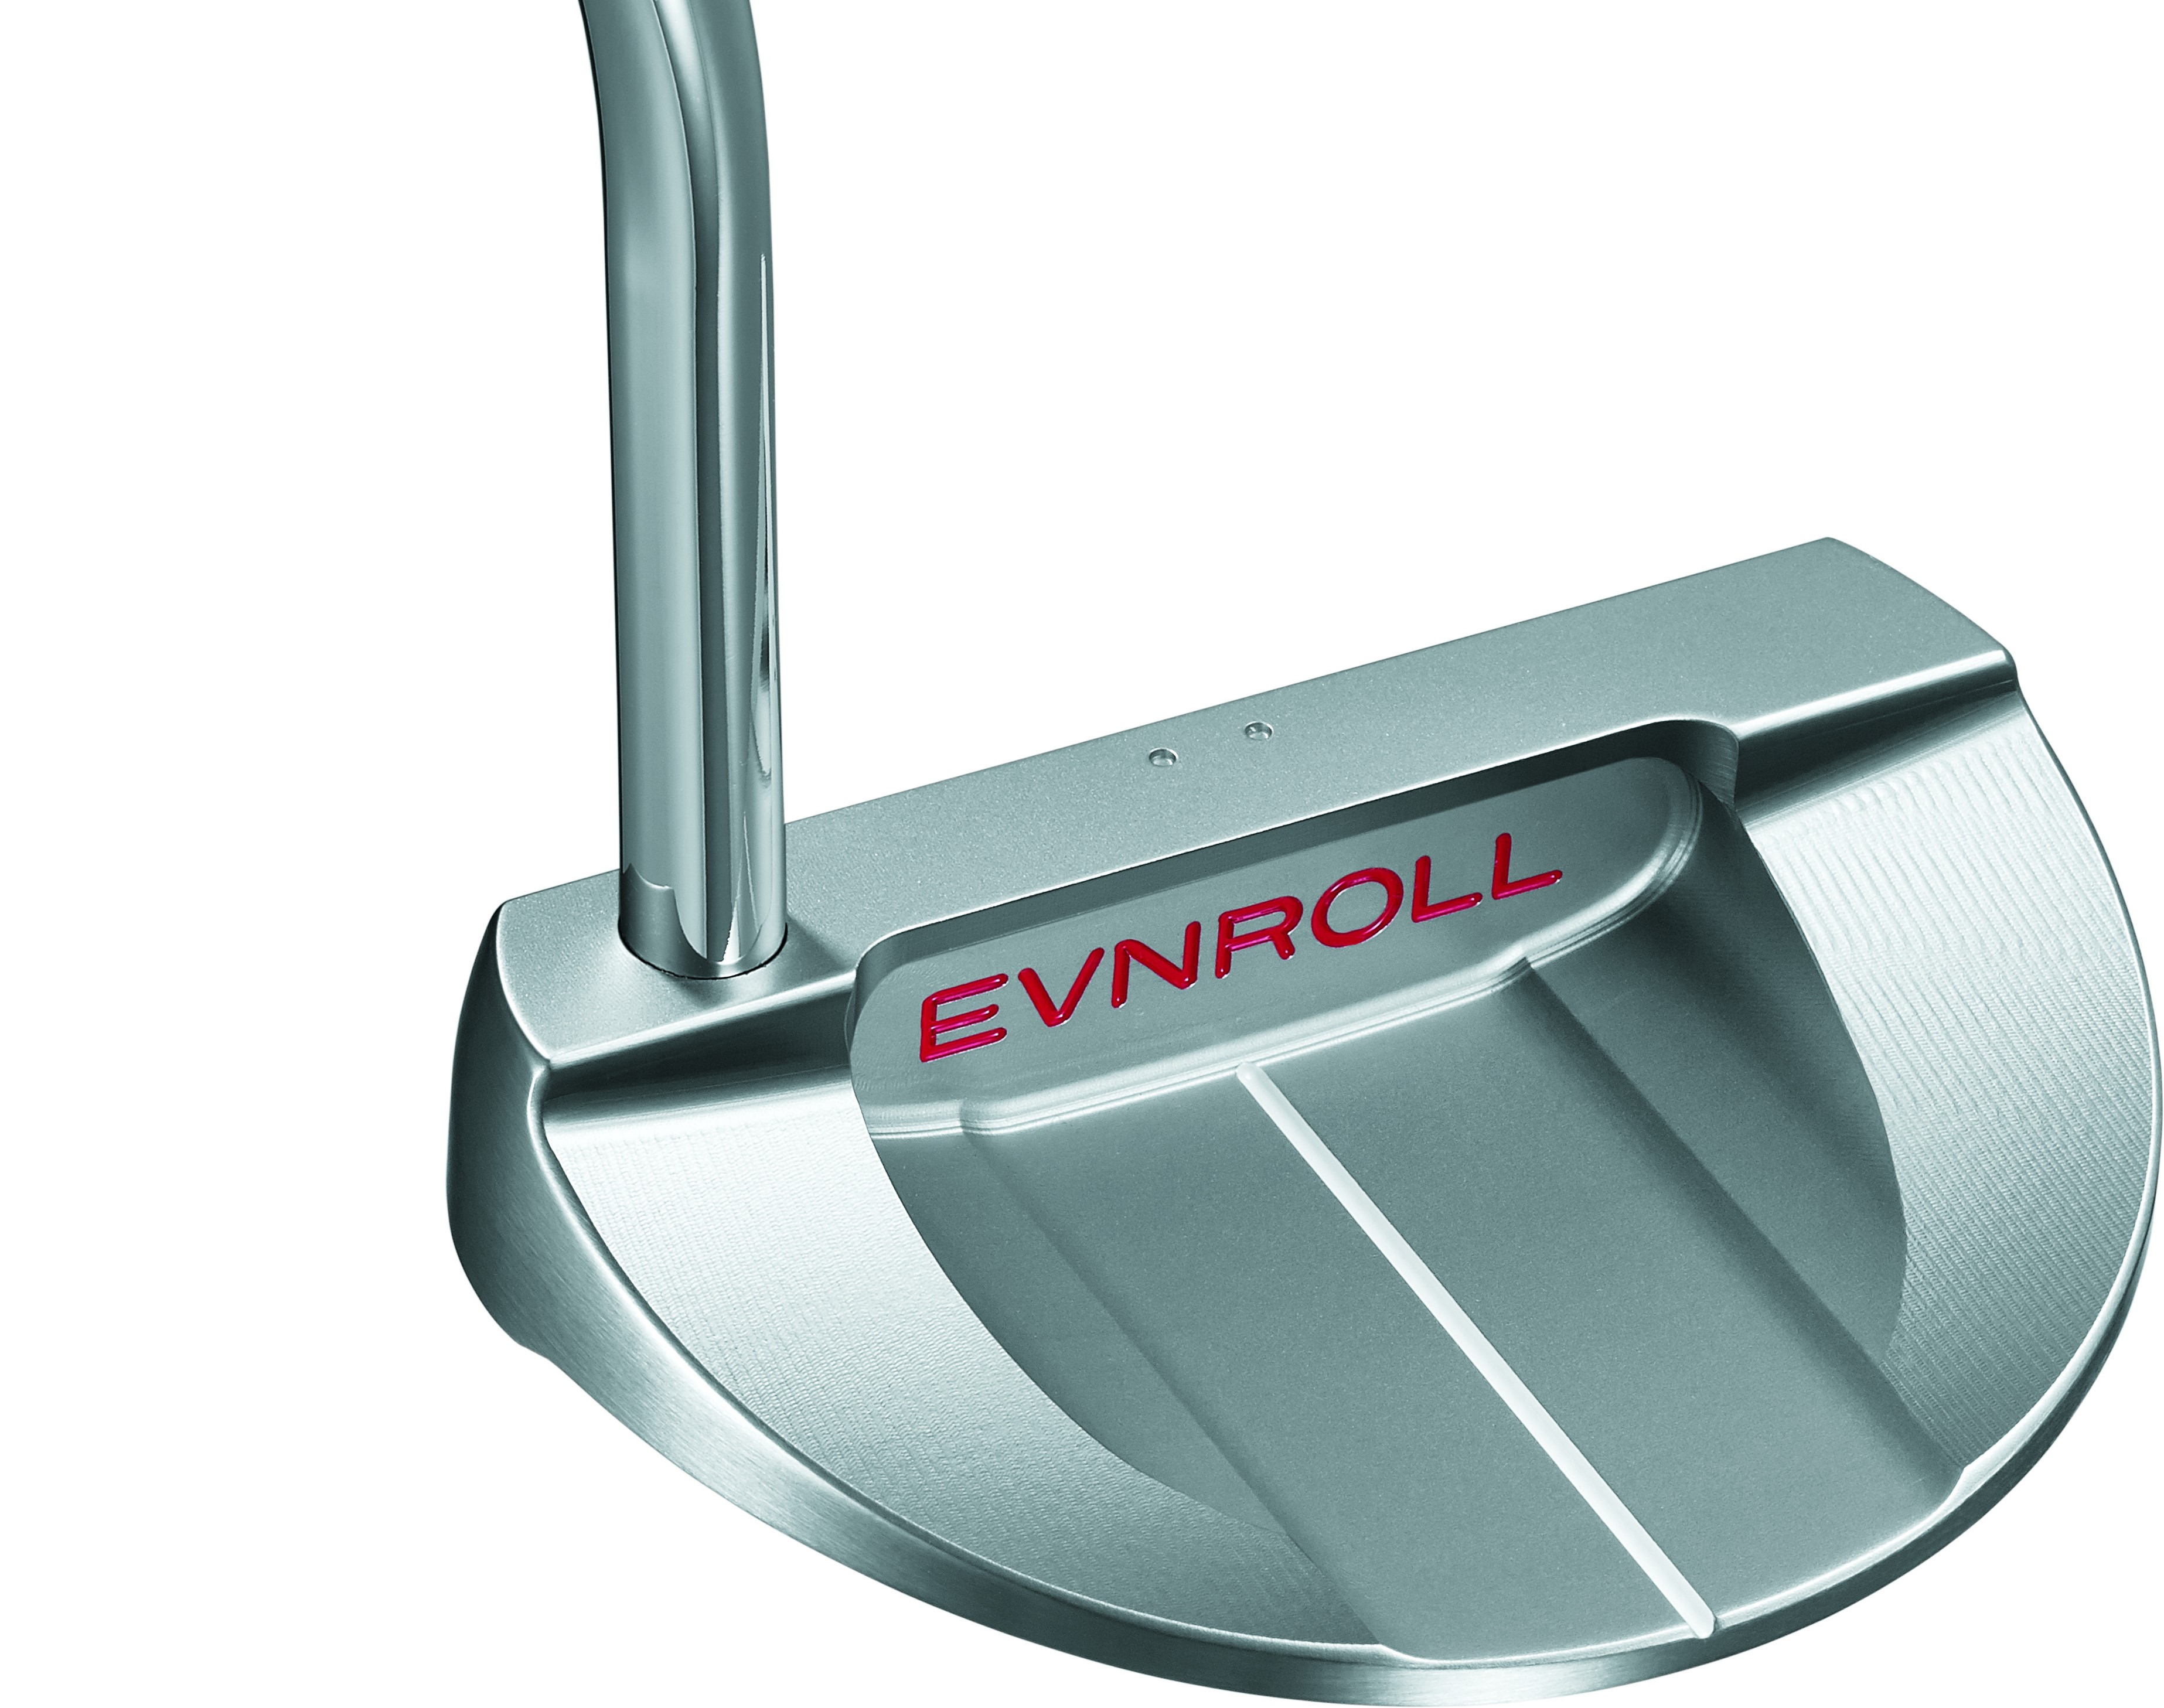 EvnRoll introduces three new putter models